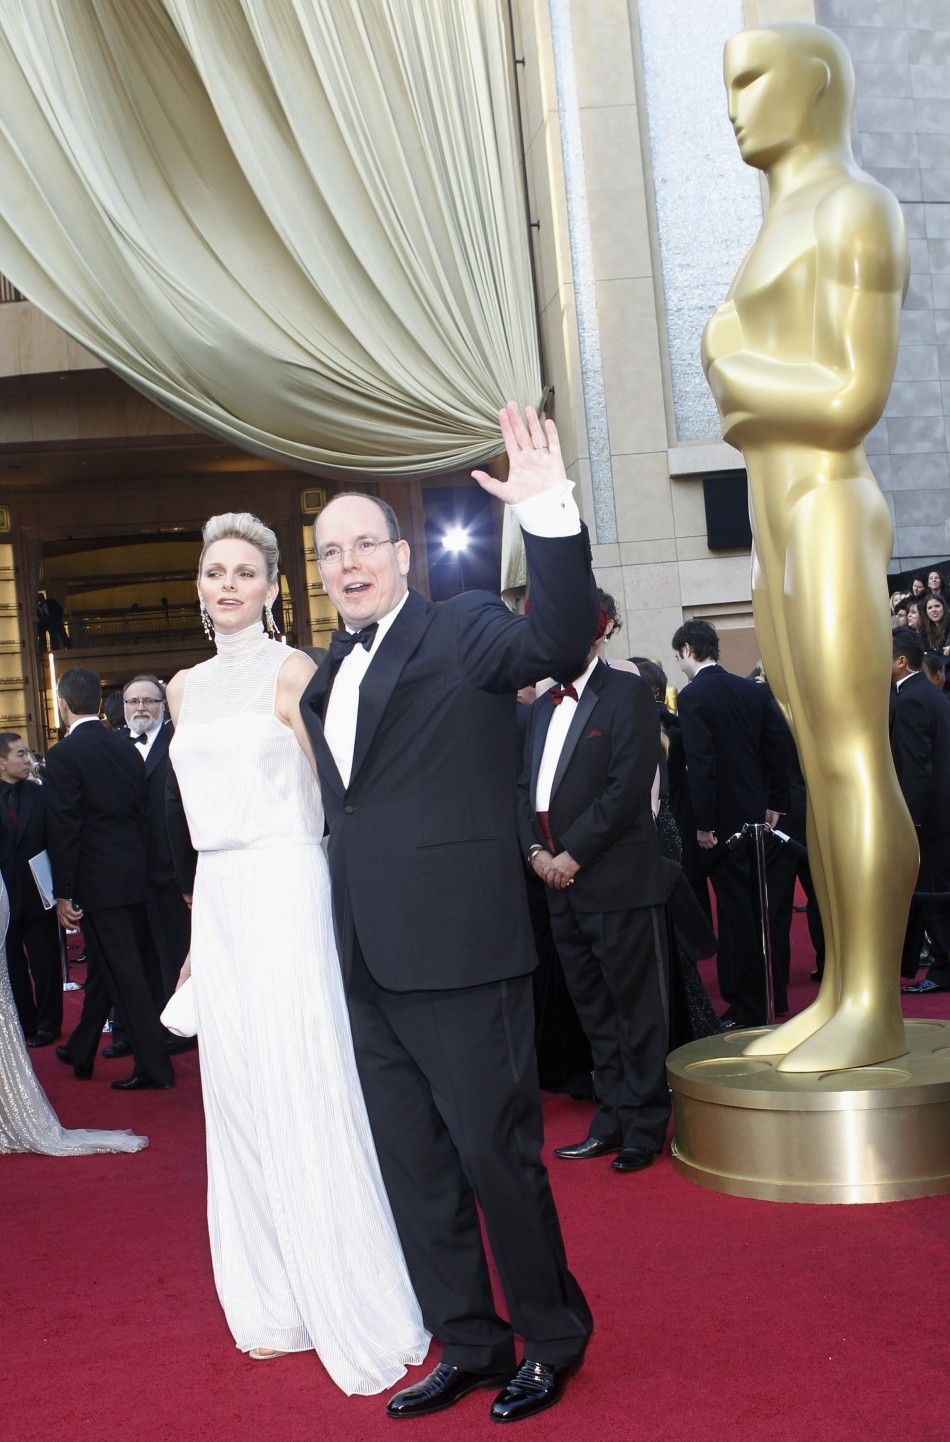 Princess Charlene Joins the Retro Fever at Oscars 2012, Dons White on Red Carpet